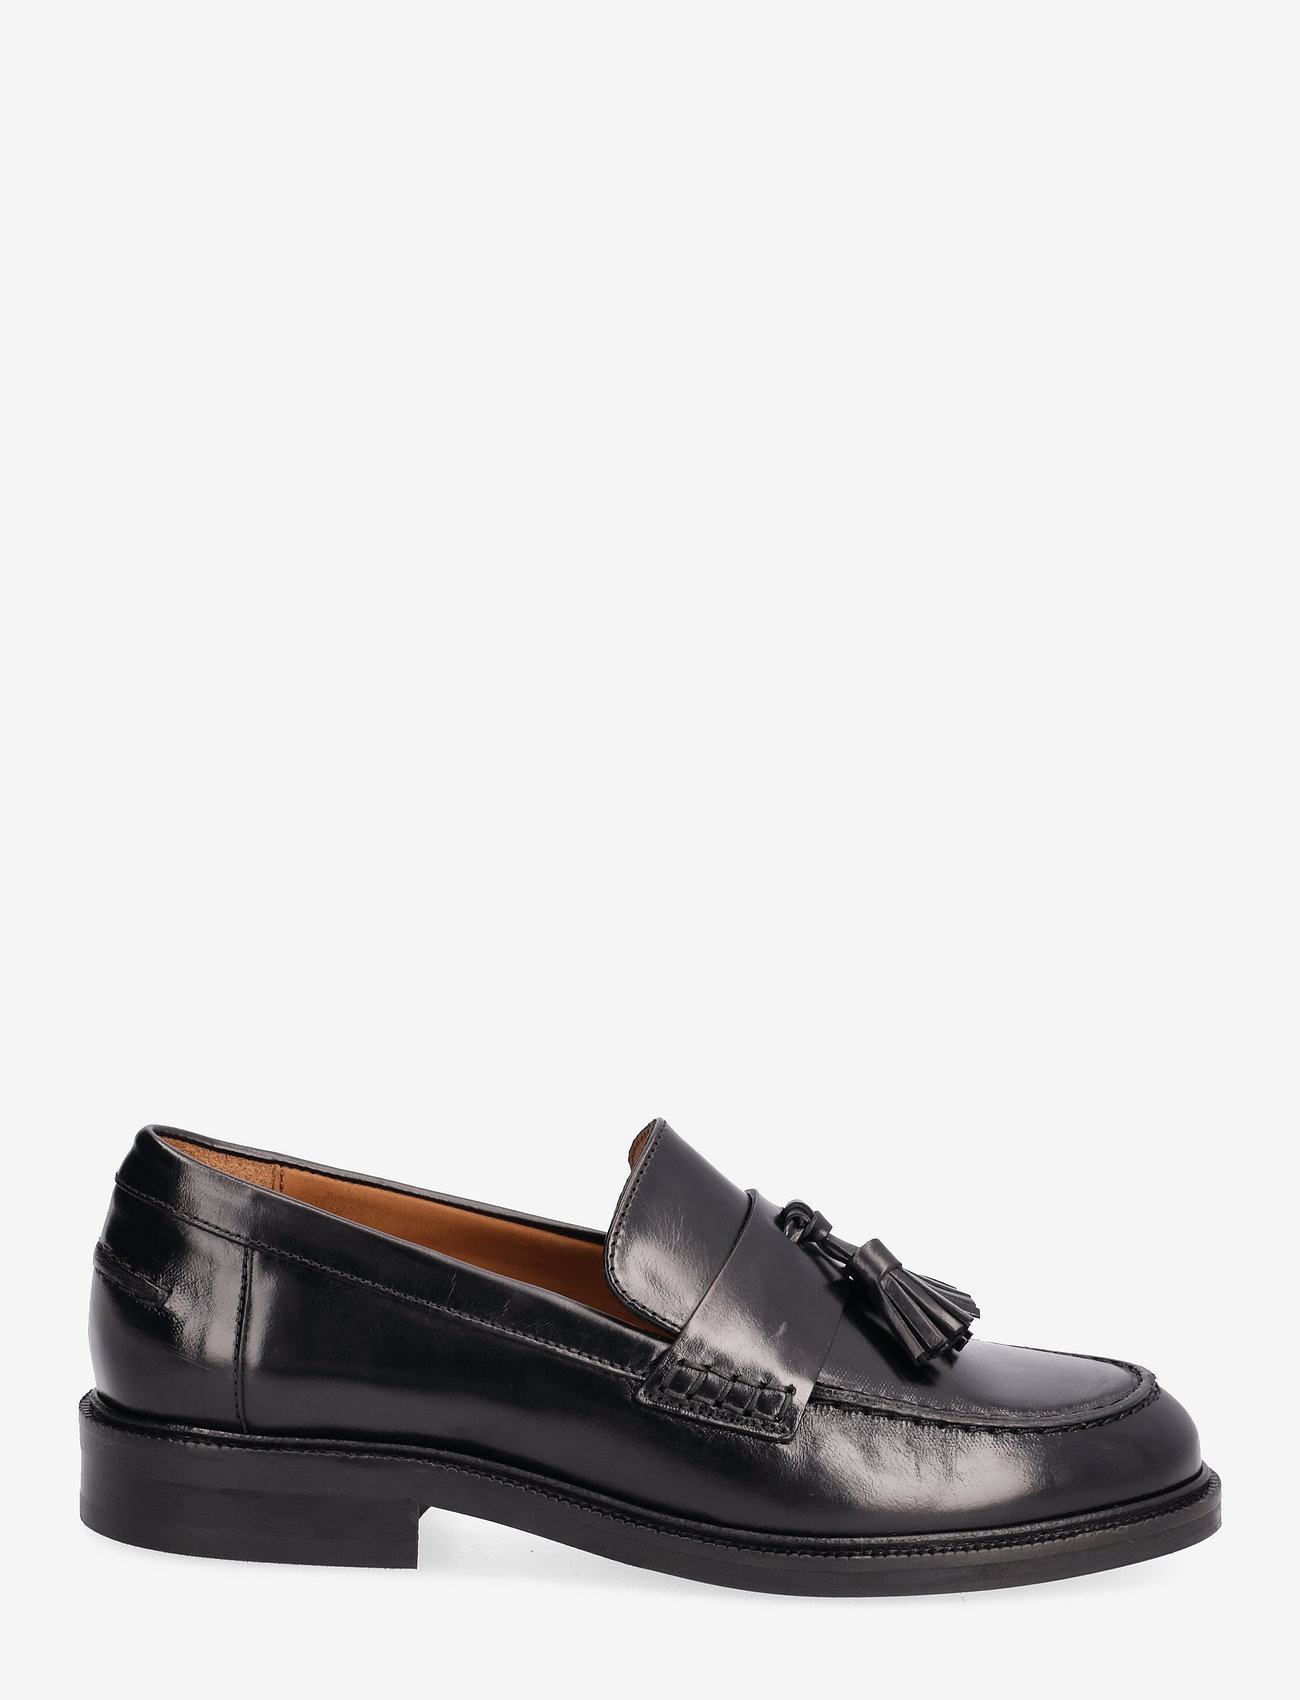 Billi Bi - Shoes - geburtstagsgeschenke - black desire calf 80 - 1